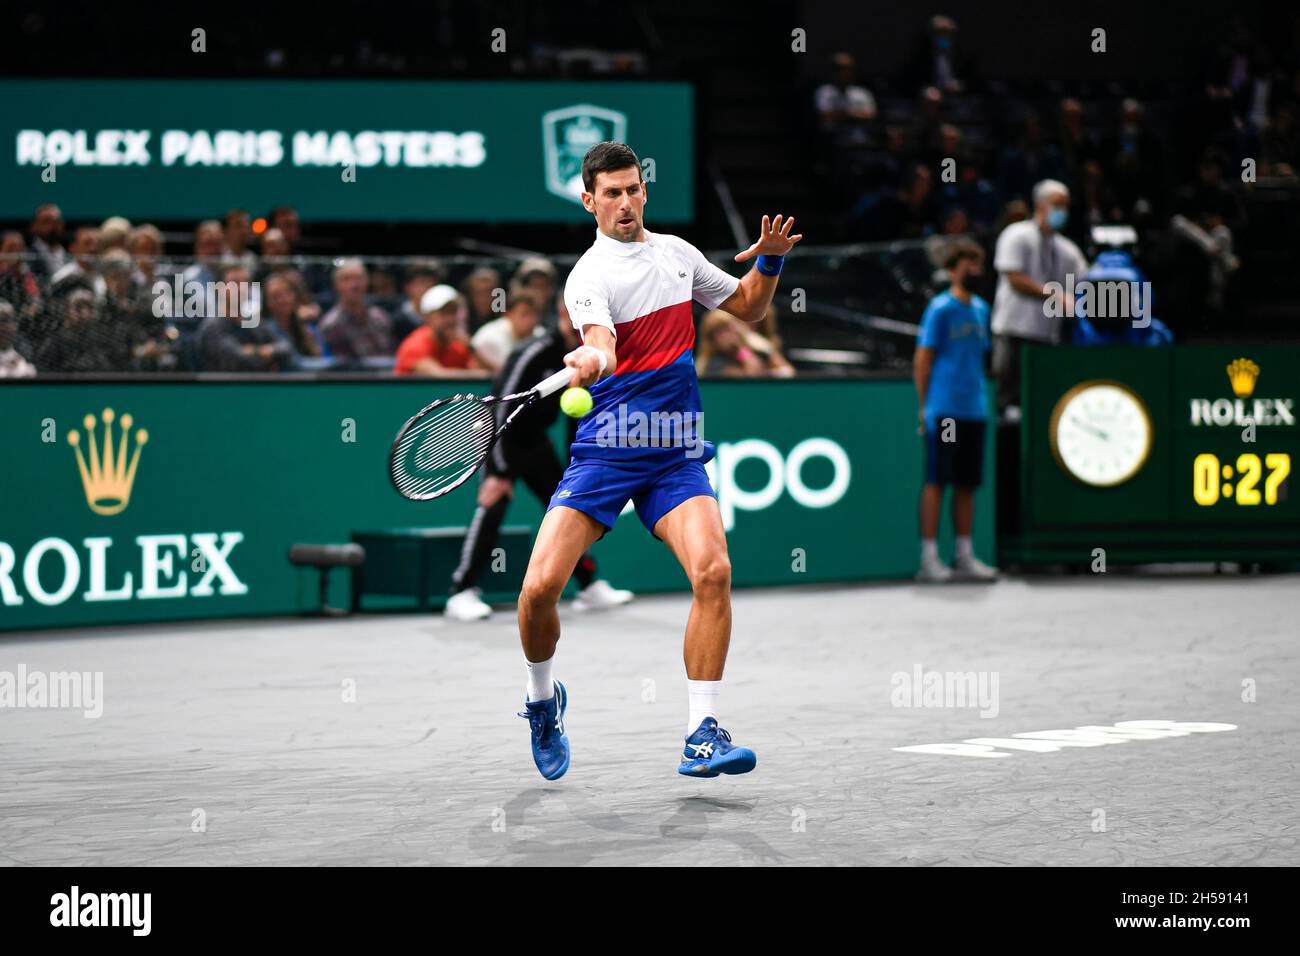 Tennis paris masters tennis tournament hi-res stock photography and images  - Alamy